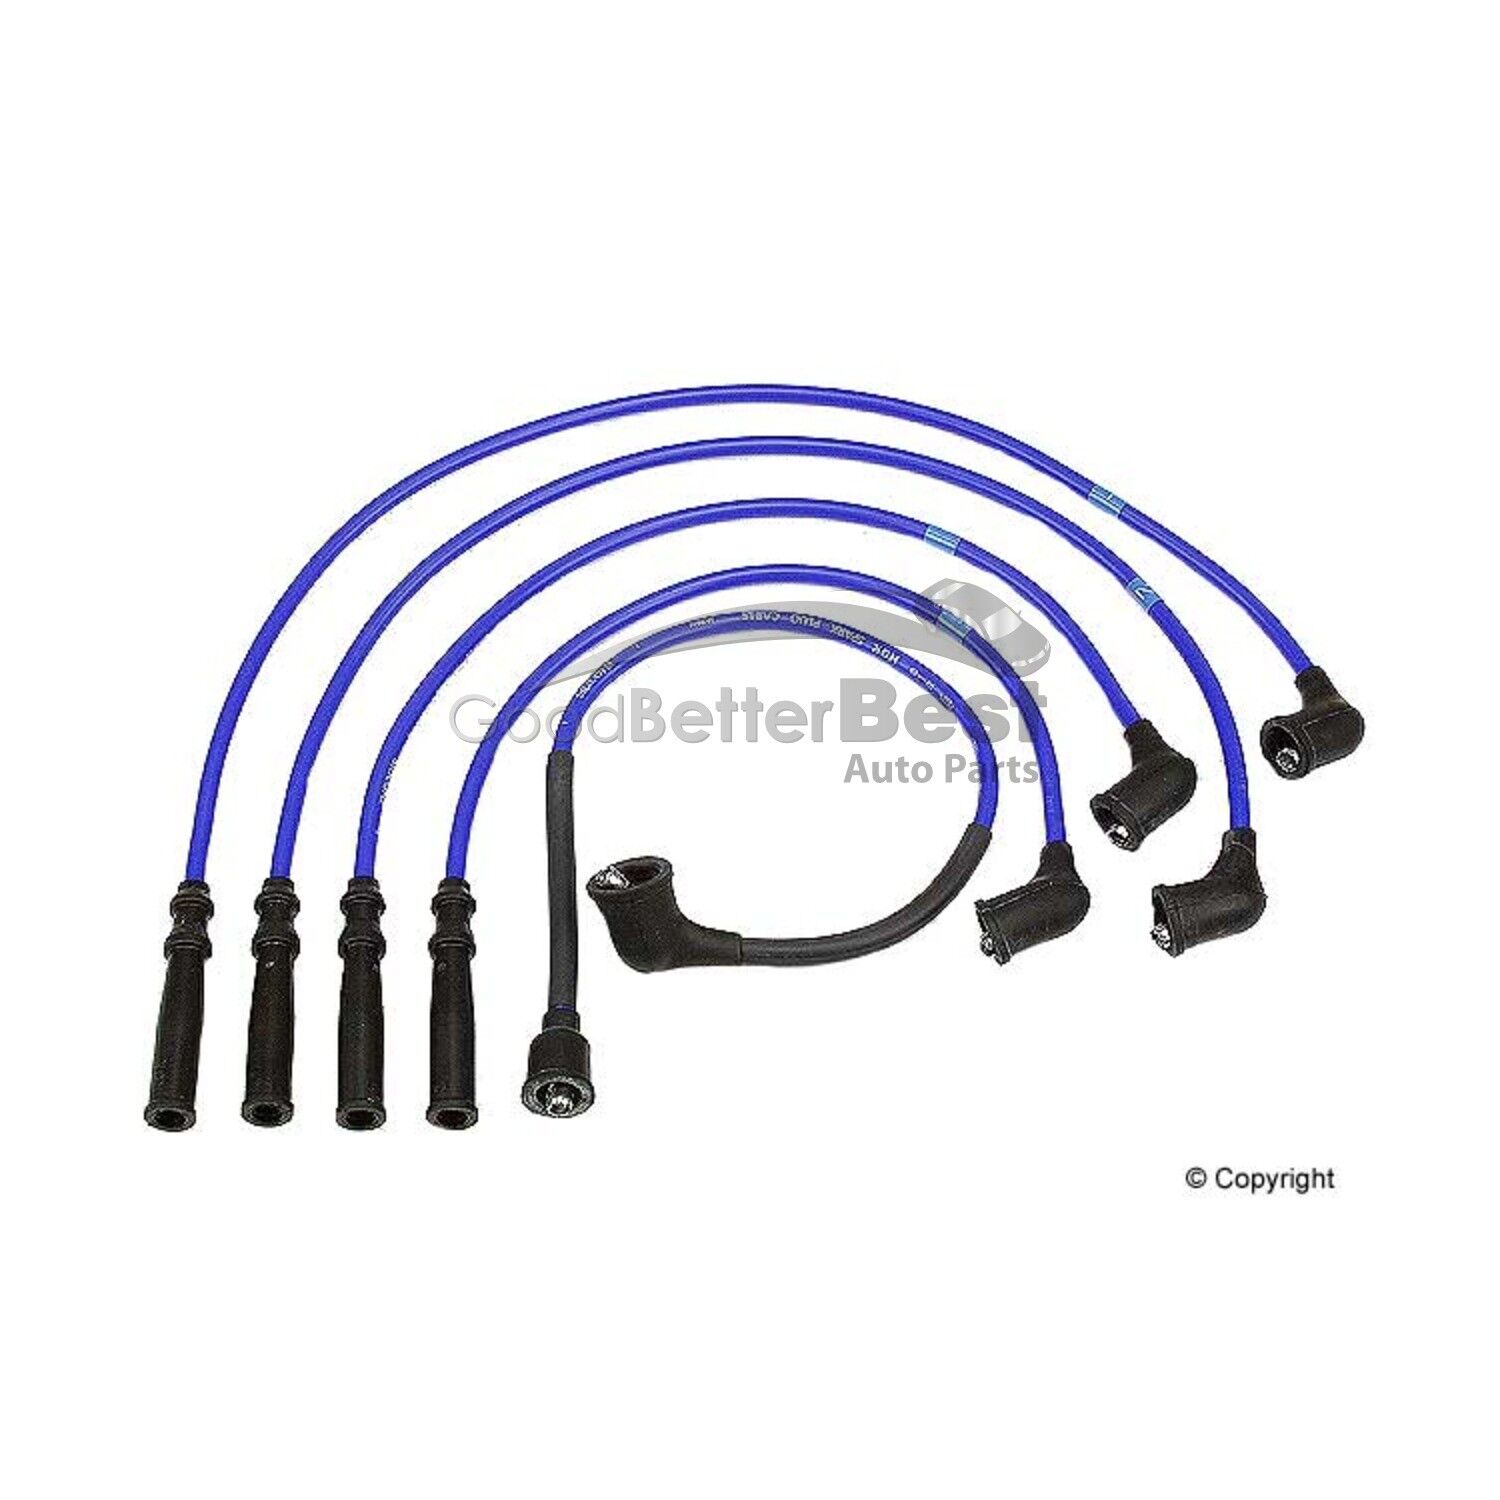 New NGK Spark Plug Wire Set 9786 for Mazda 323 MX-3 Protege